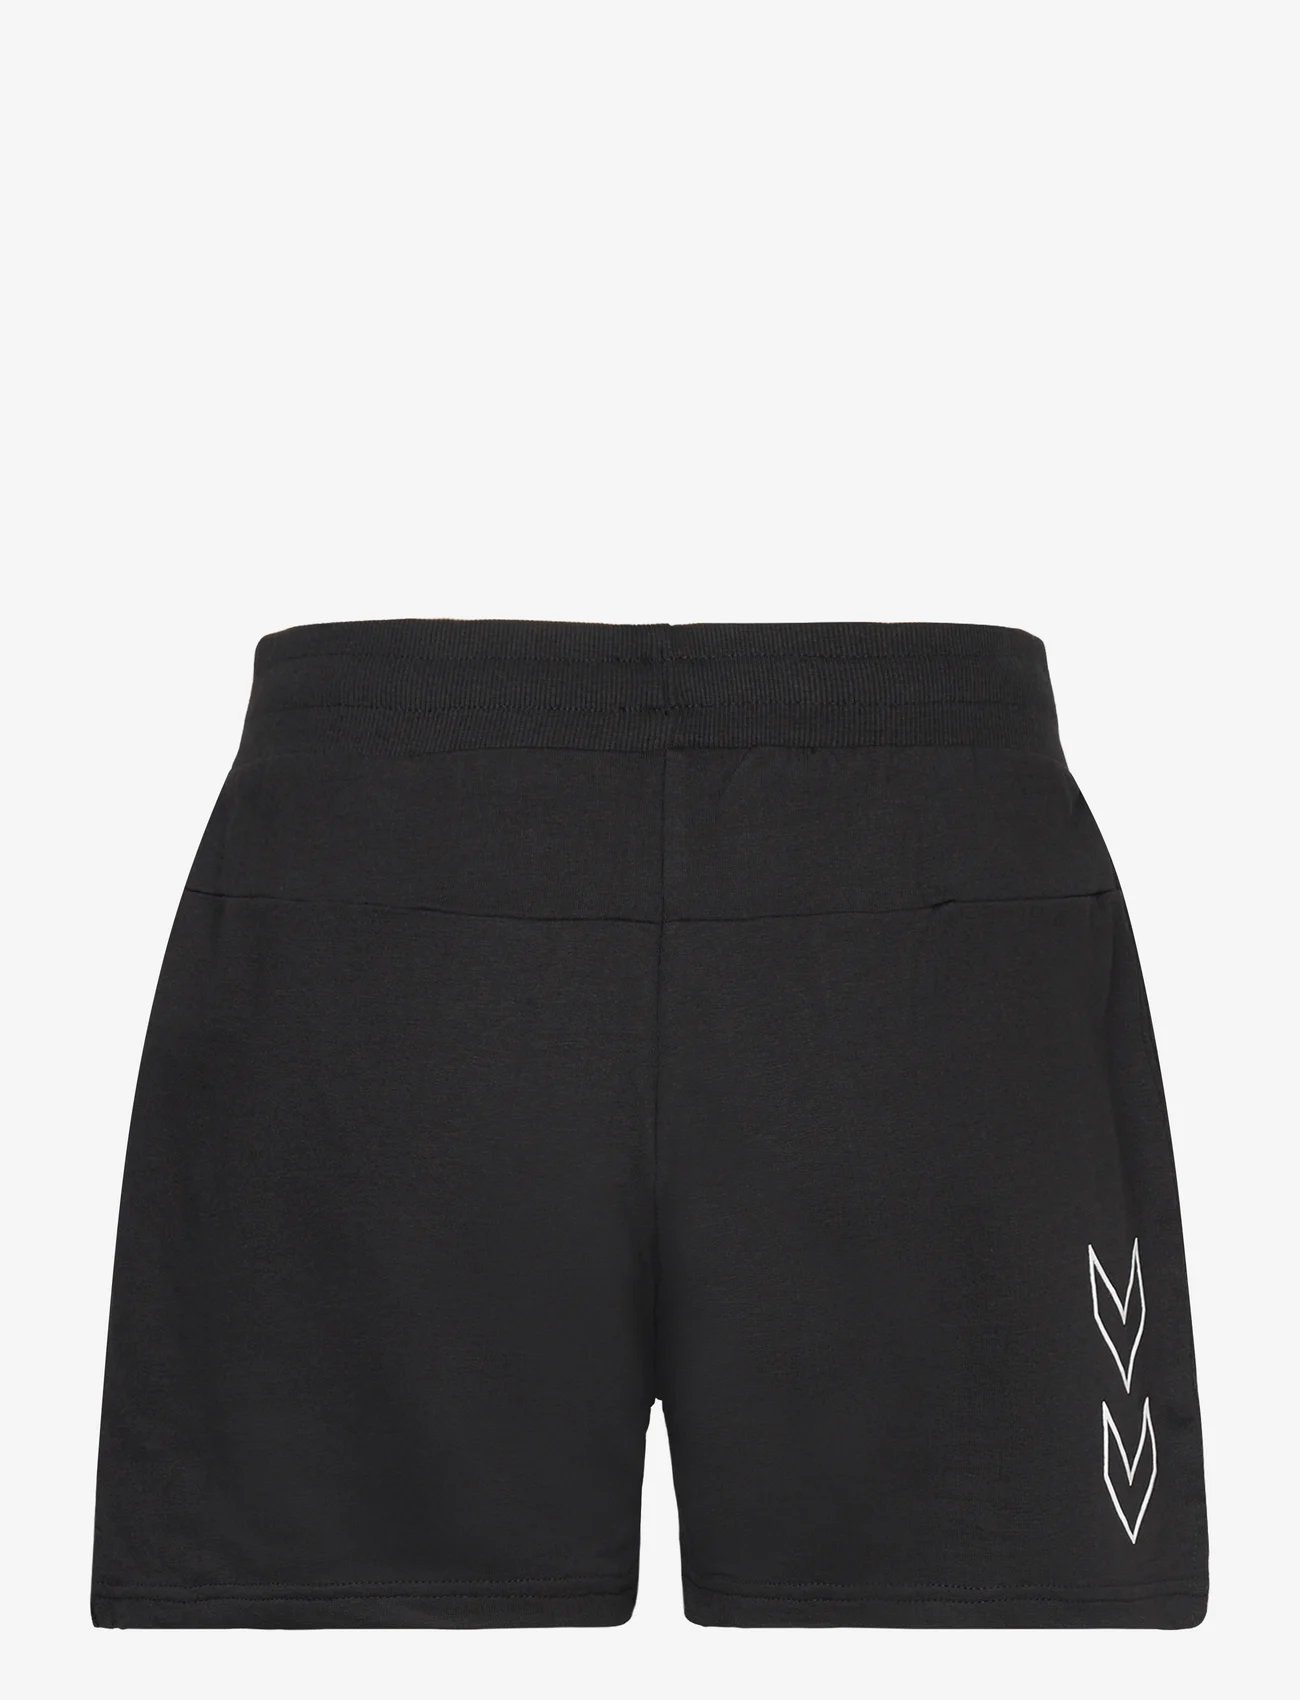 Hummel - hmlLGC SENNA SWEAT SHORTS - sweat shorts - black - 1